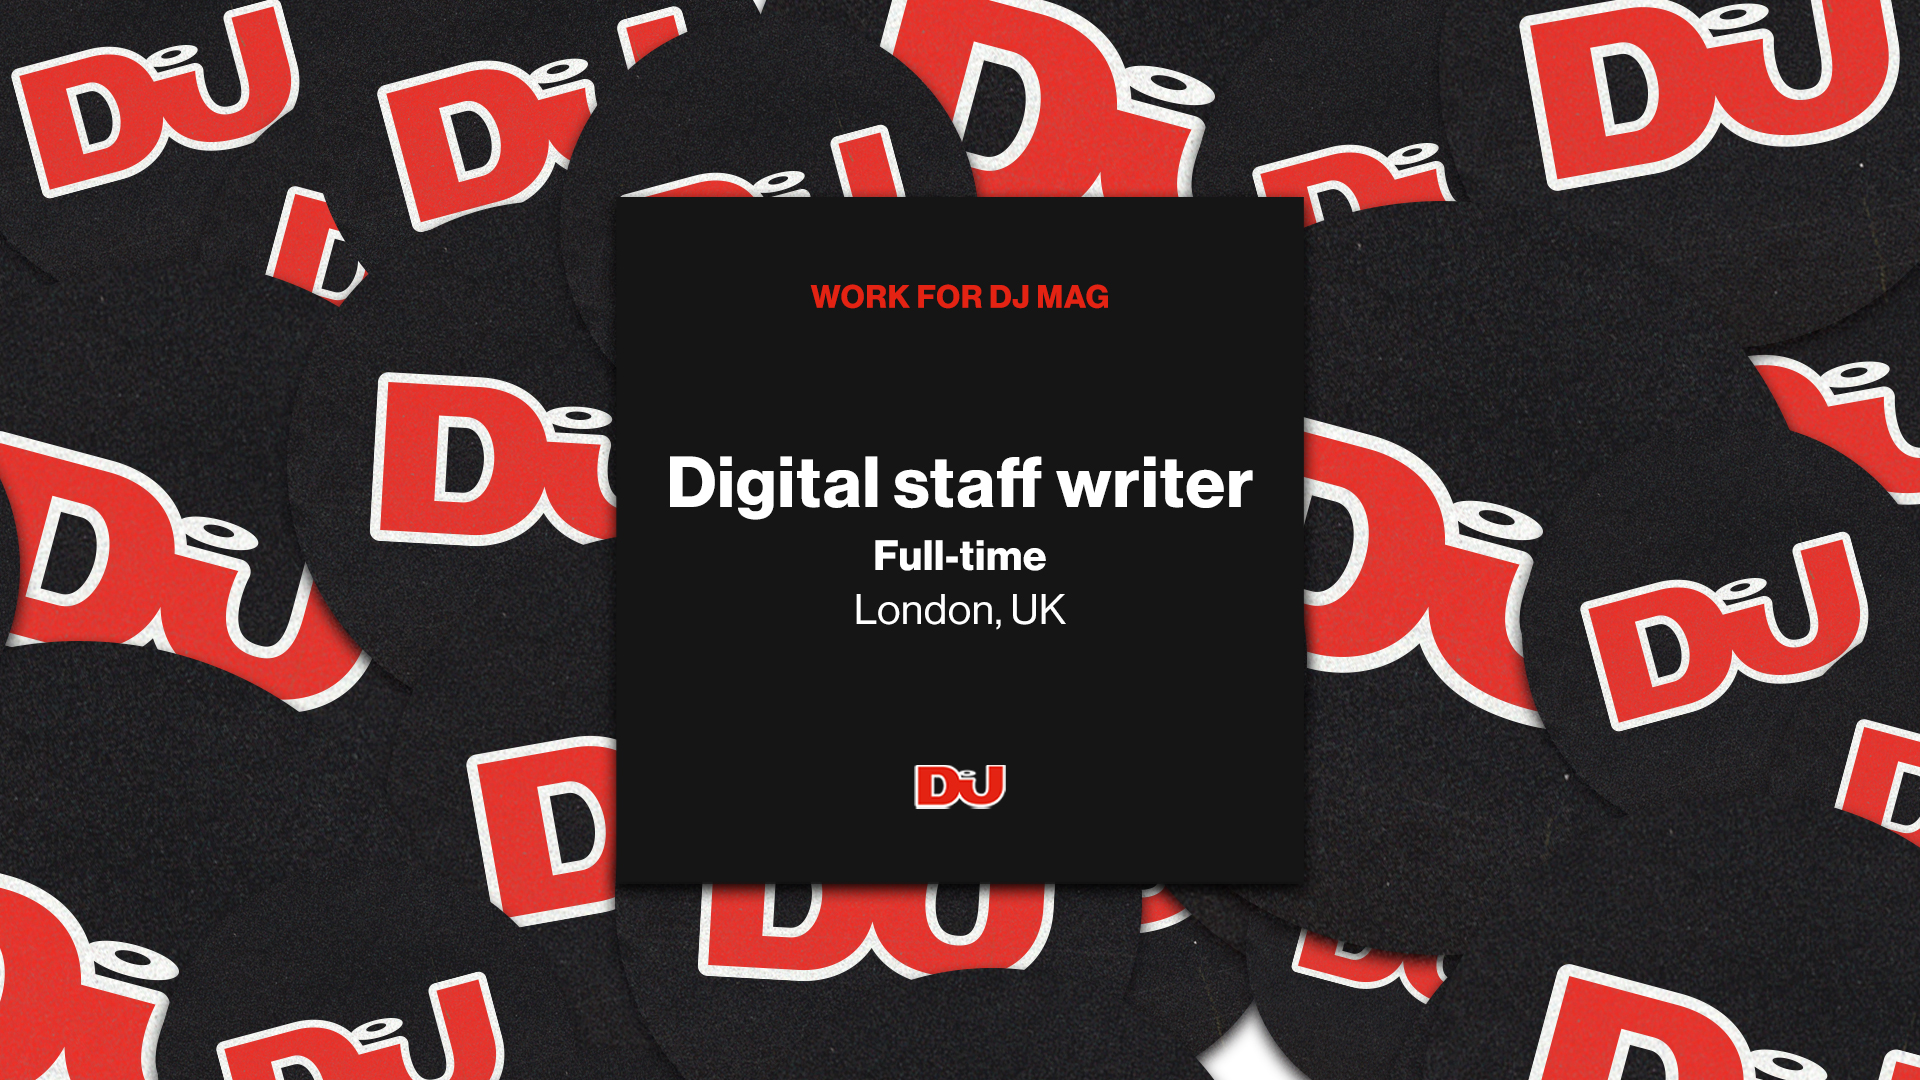 Digital staff writer role advert